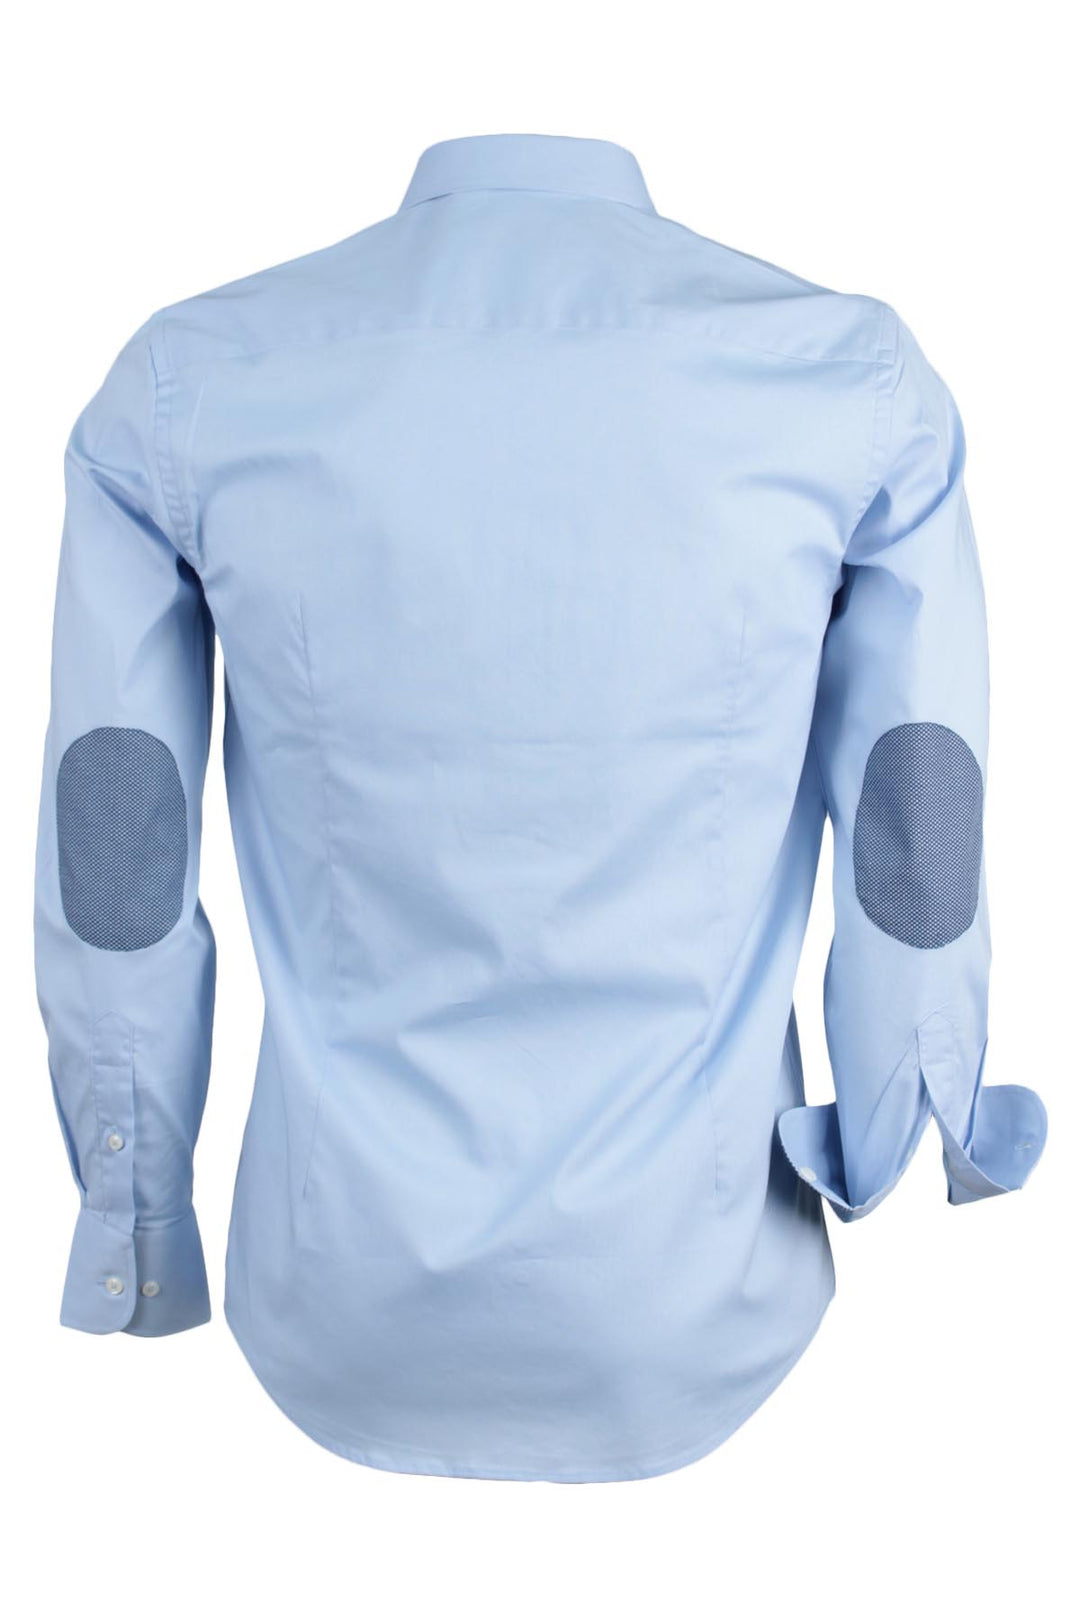 Camicia da uomo tinta unita con collo, polsini e toppe a contrasto in microfantasia